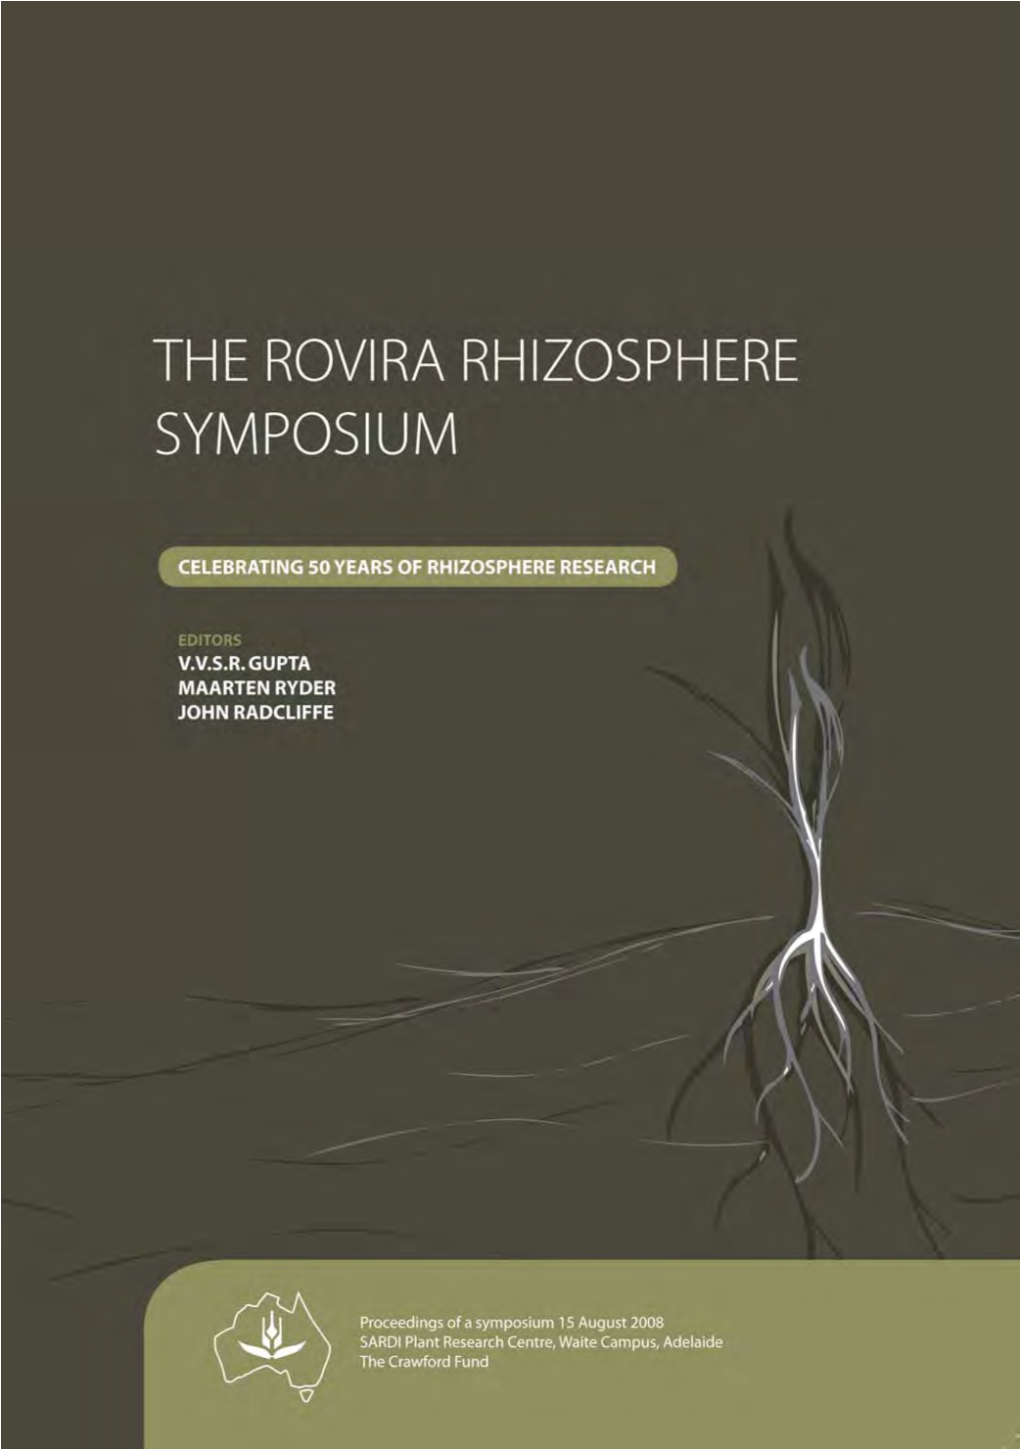 THE ROVIRA RHIZOSPHERE SYMPOSIUM Celebrating 50 Years of Rhizosphere Research